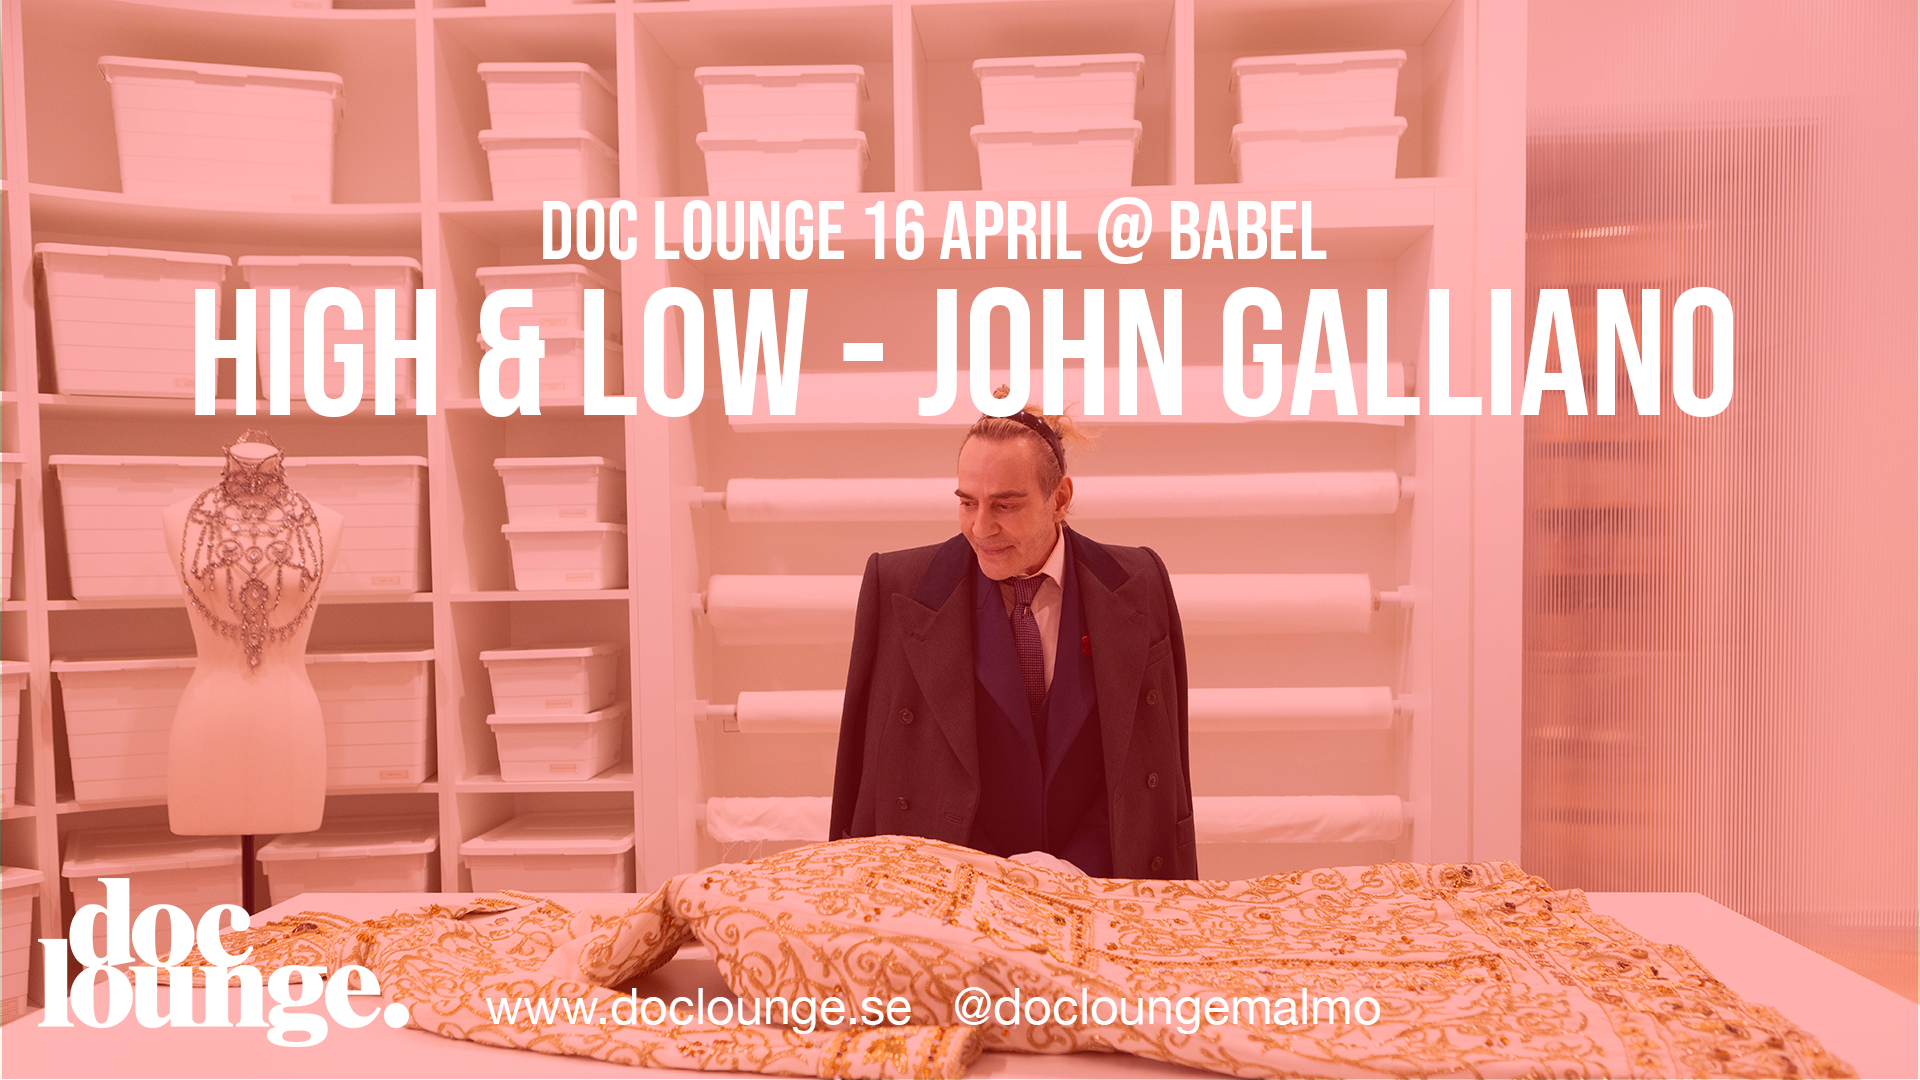 Doc Lounge pres. High & Low - John Galliano